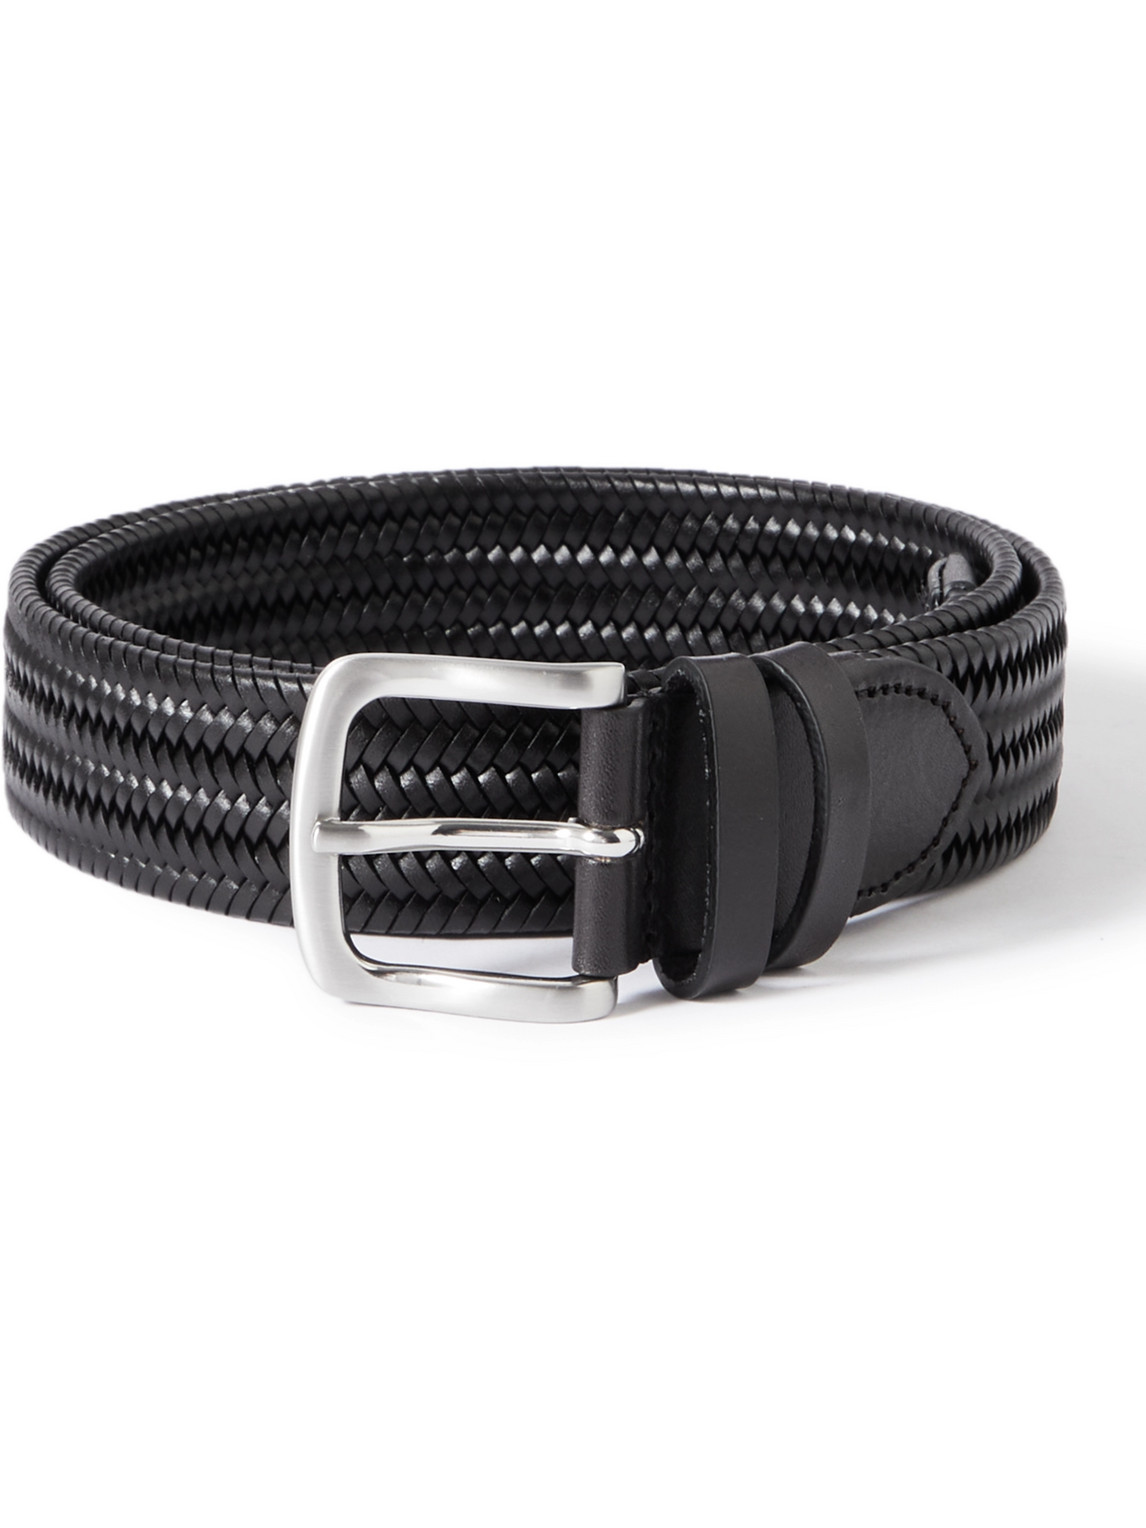 Mr P 3.5cm Woven Leather Belt In Black